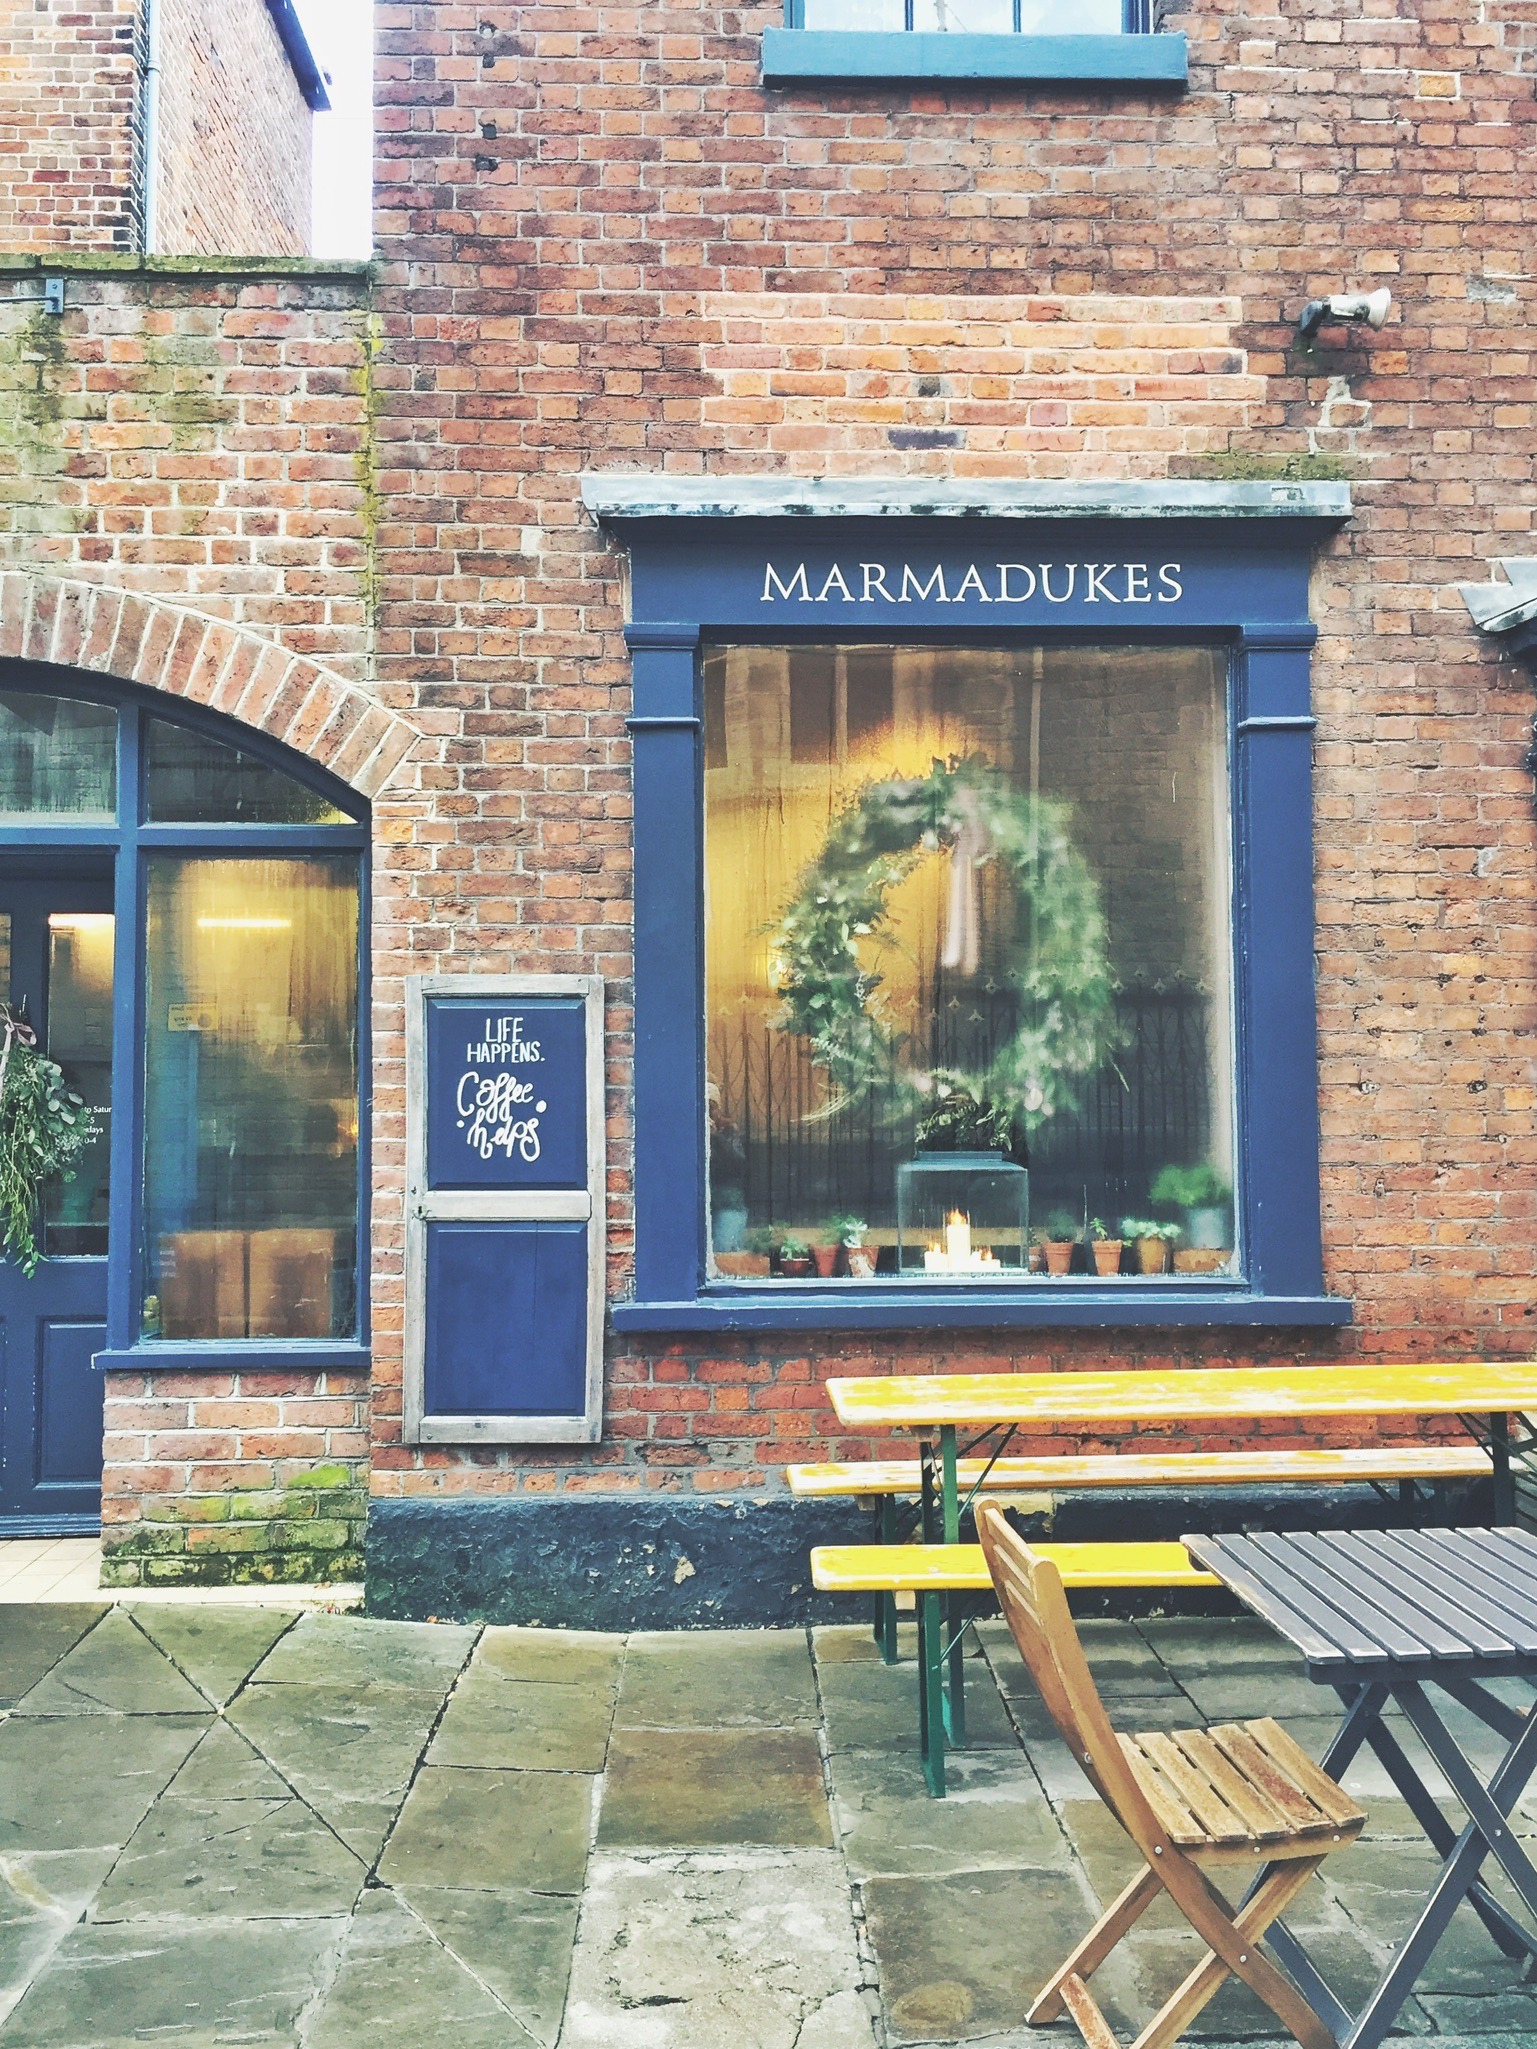 Life Happens, Coffee Helps - Marmadukes, Sheffield